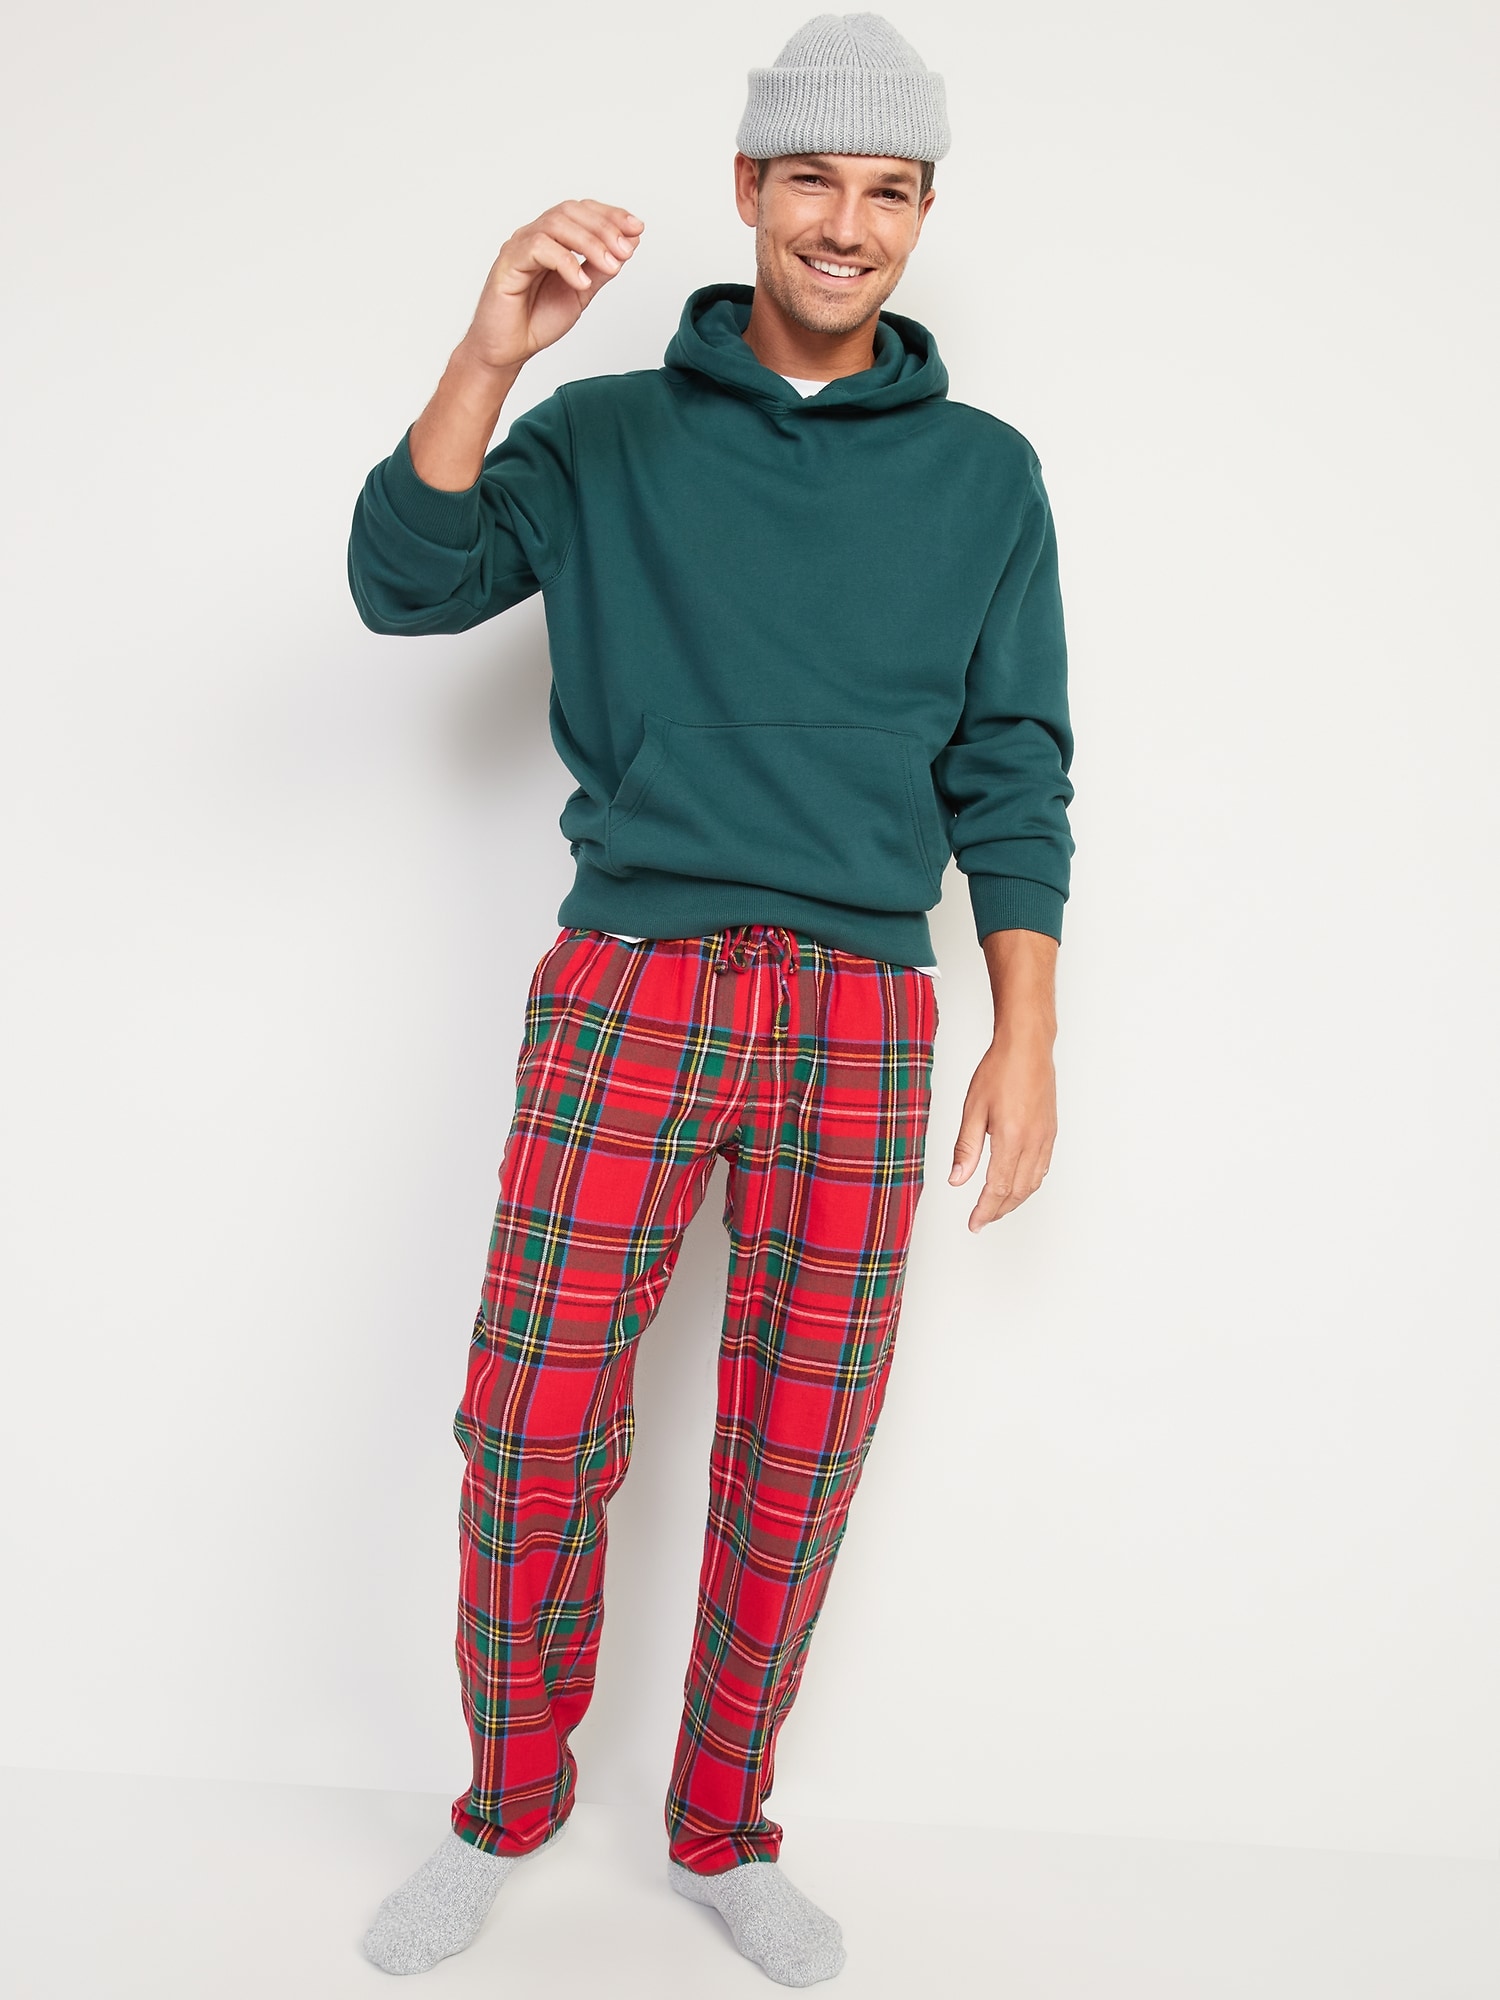 Real Essentials Mens Blue Red Plaid Pajama Pants Size XXXL - beyond exchange